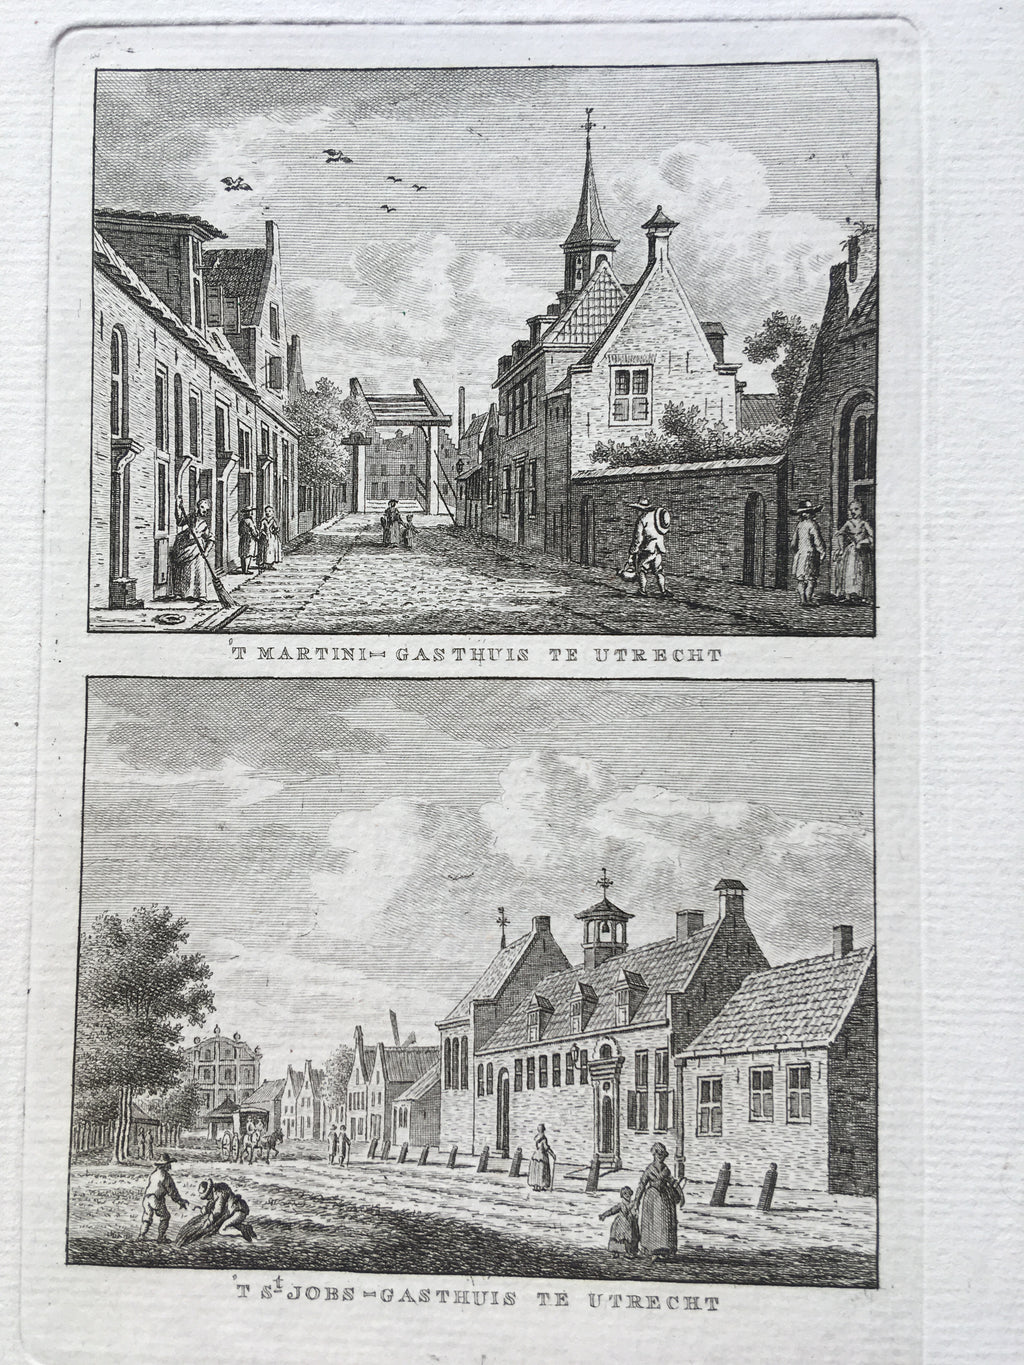 Martini-gasthuis kerk en St. Jobs-gasthuis kerk te Utrecht - 1793